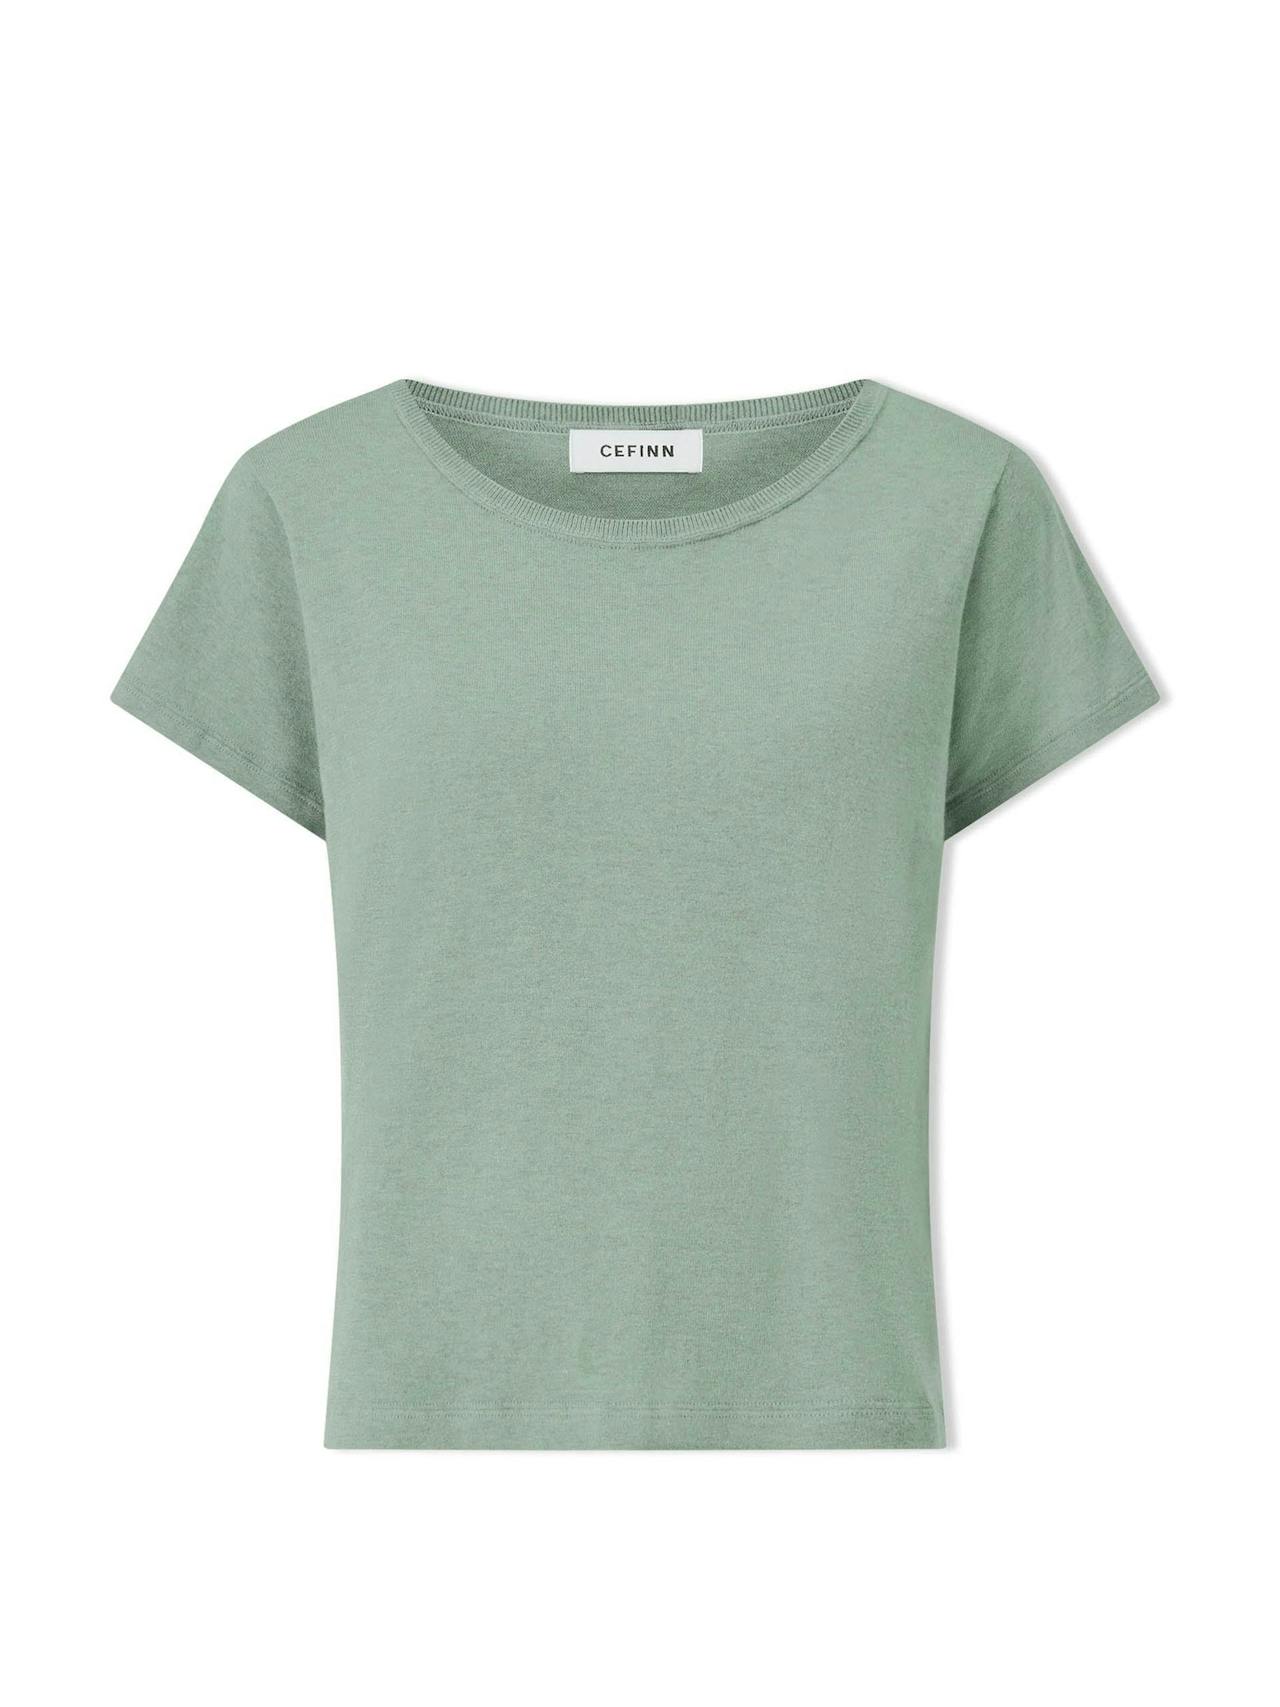 Sage green Madison linen blend round neck knit t-shirt